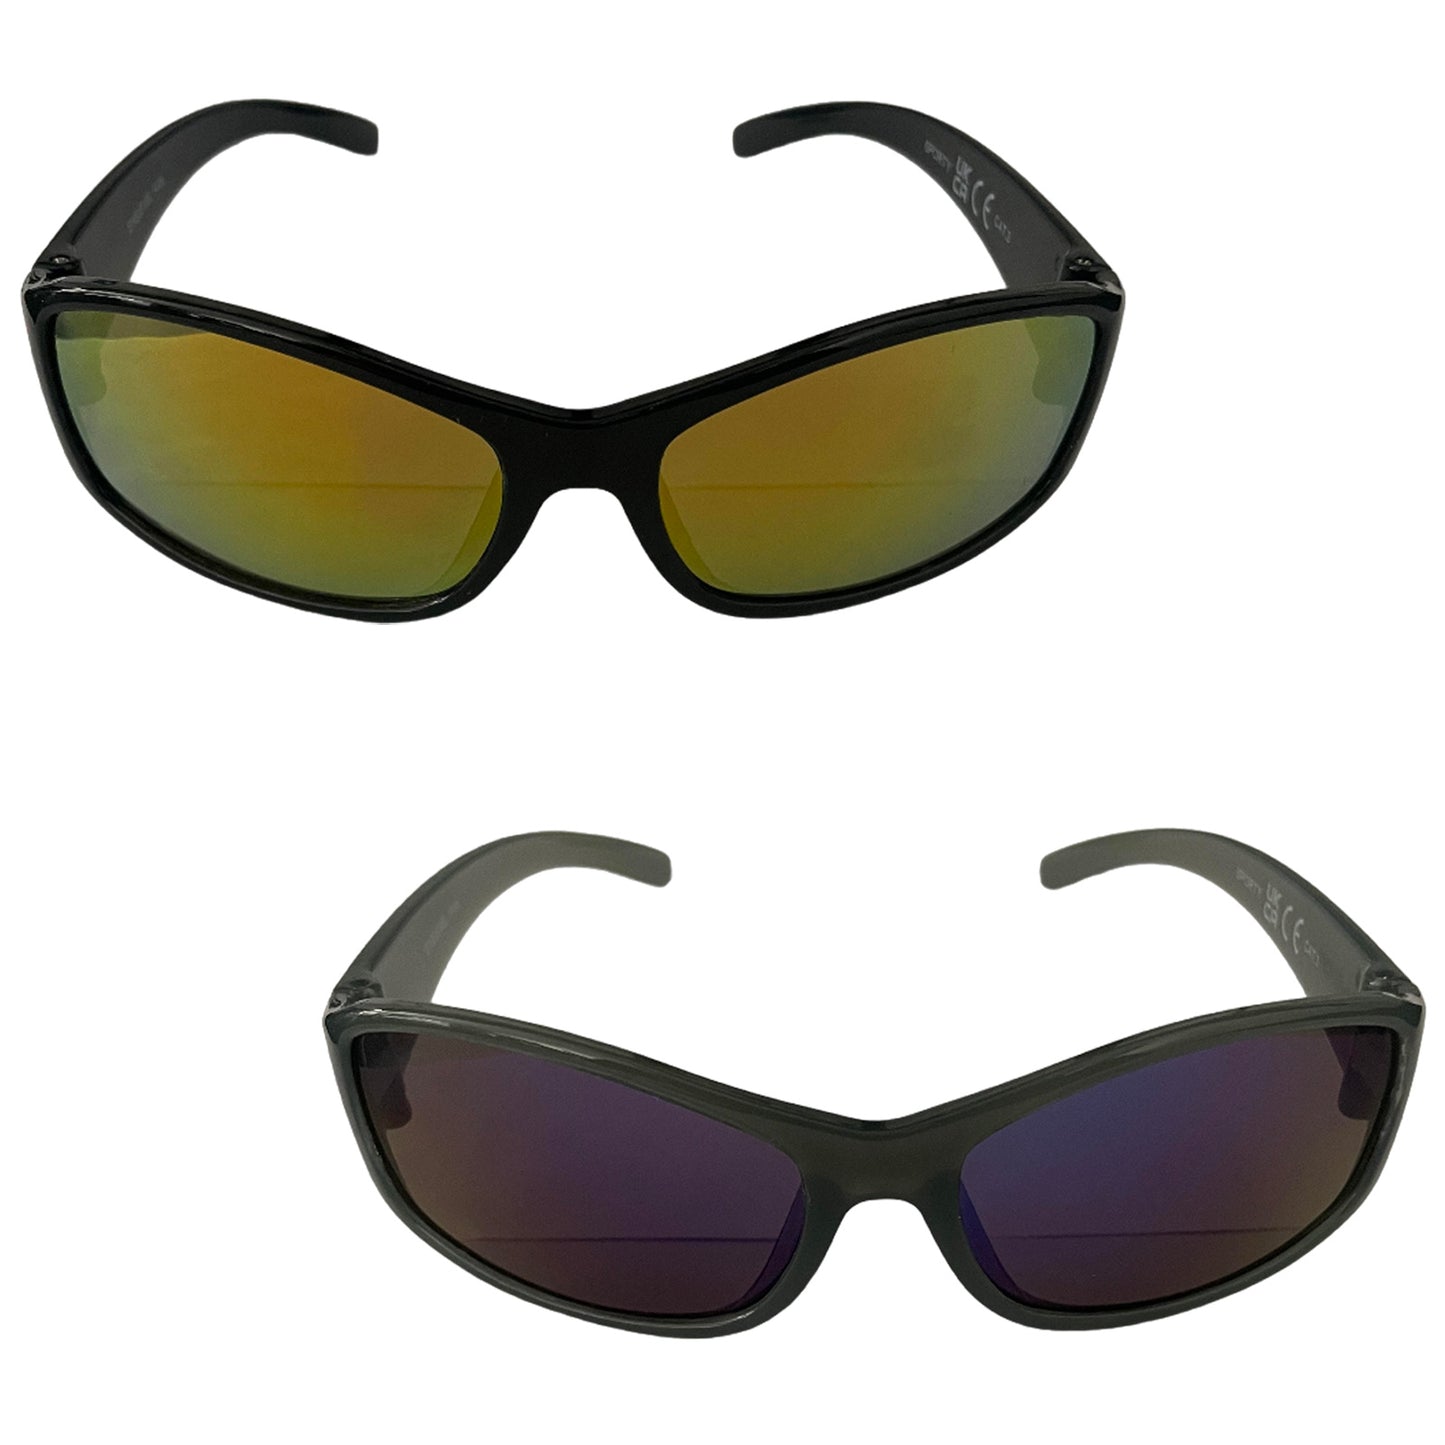 Eyelevel Junior Sporty Sunglasses